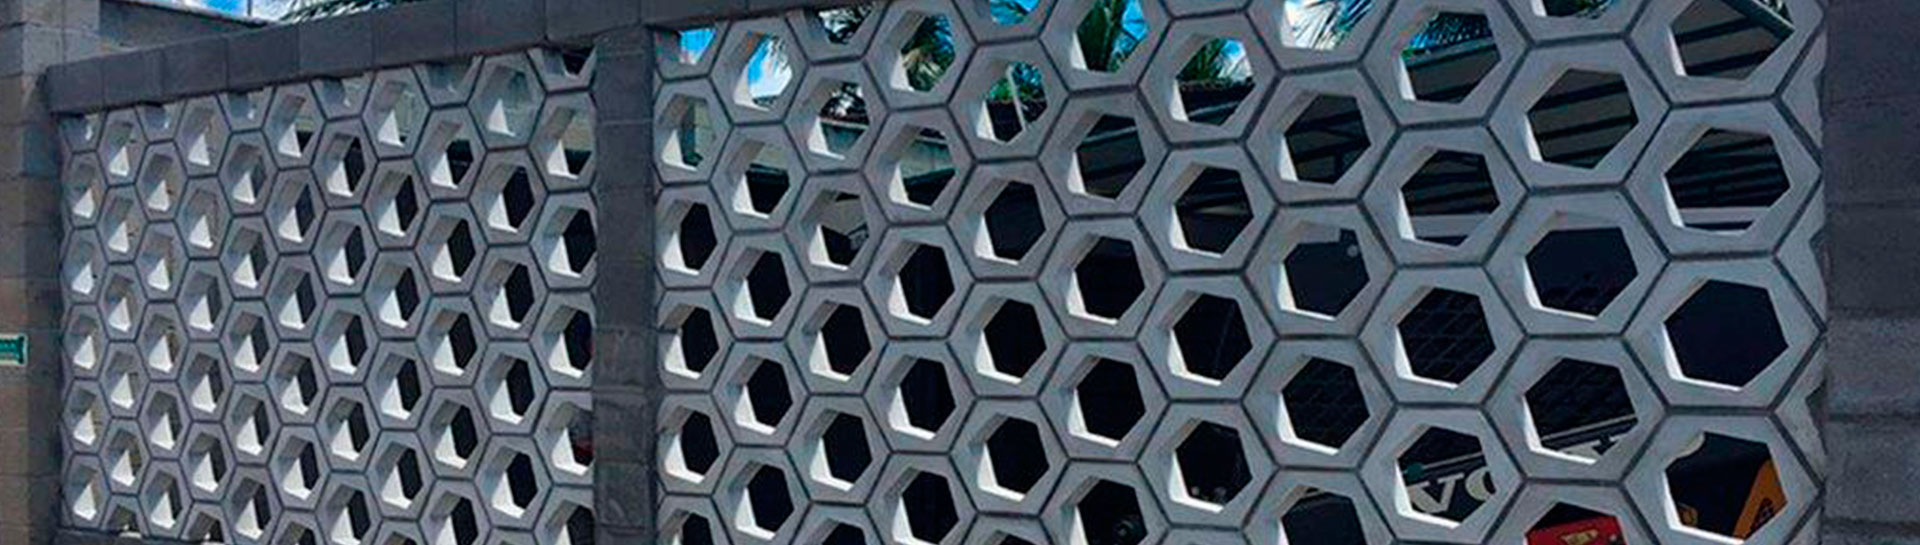 Cobog Hexagonal